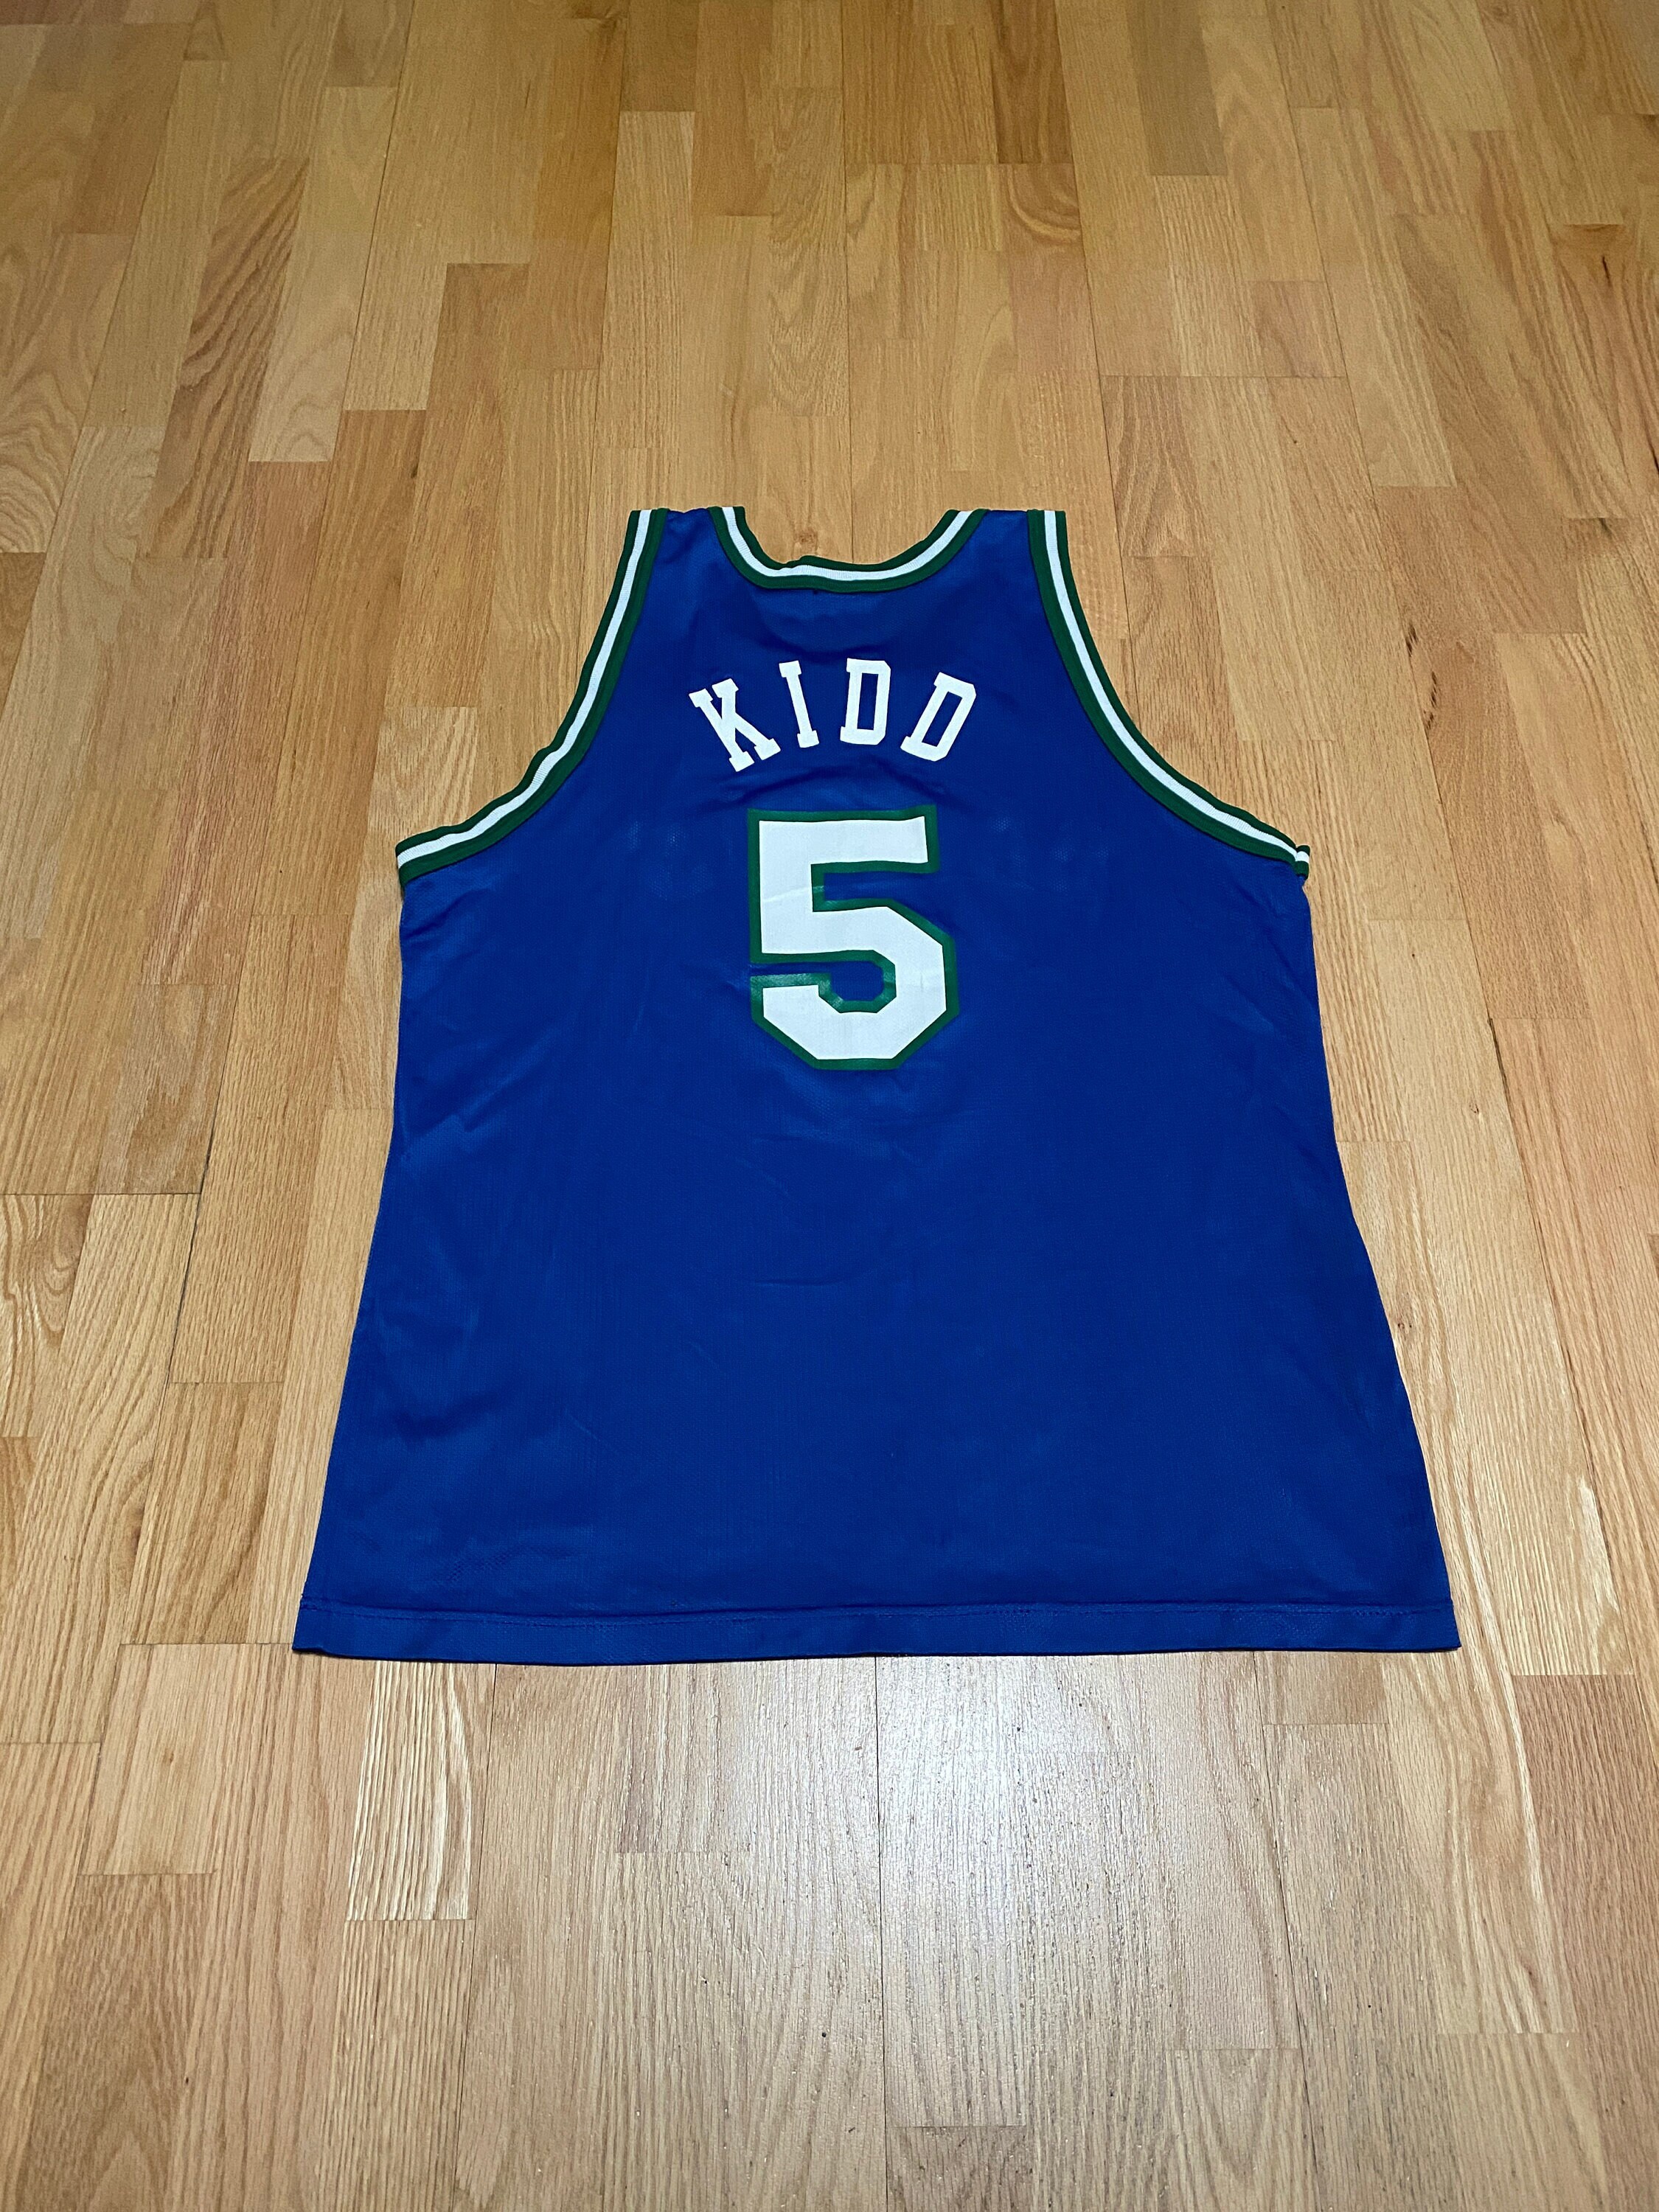 Vintage Jason Kidd Dallas Mavericks Jersey Sz 44 L BLUE 90s Champion NBA